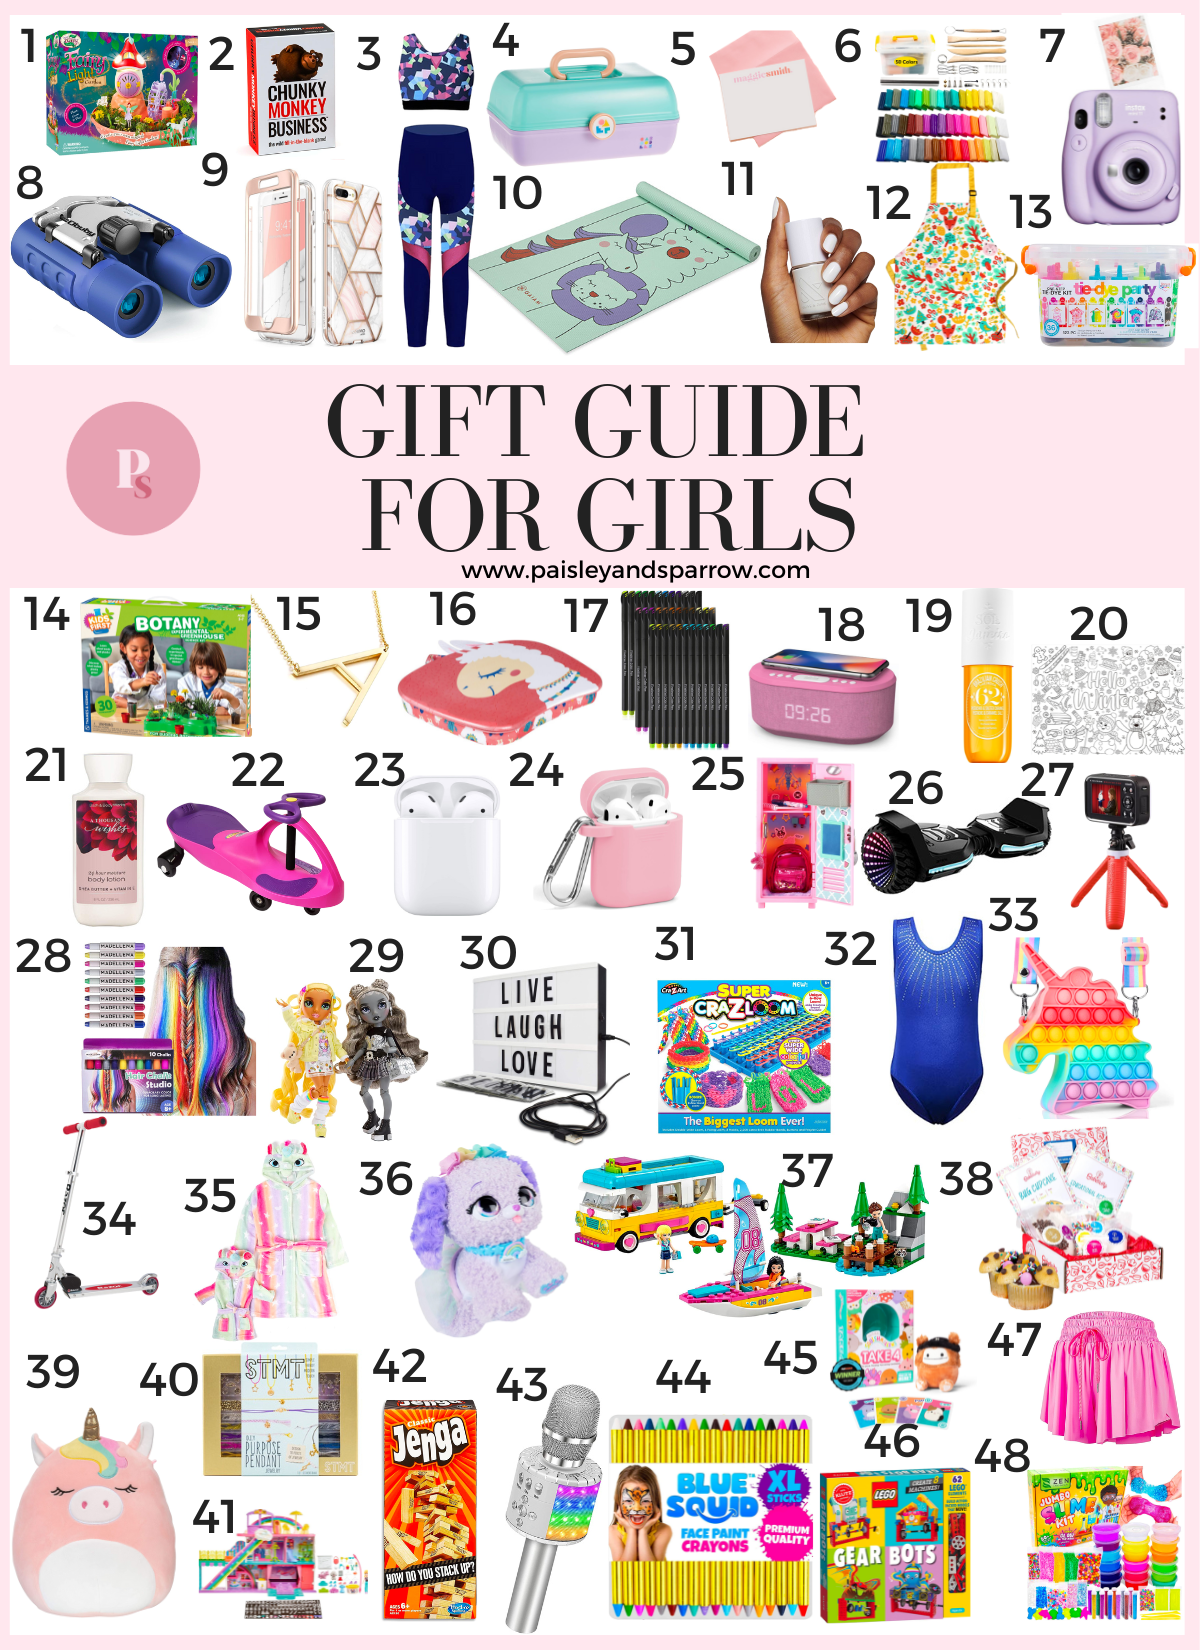 Good Birthday Gifts For Girls/Women | Best Online Gift Ideas